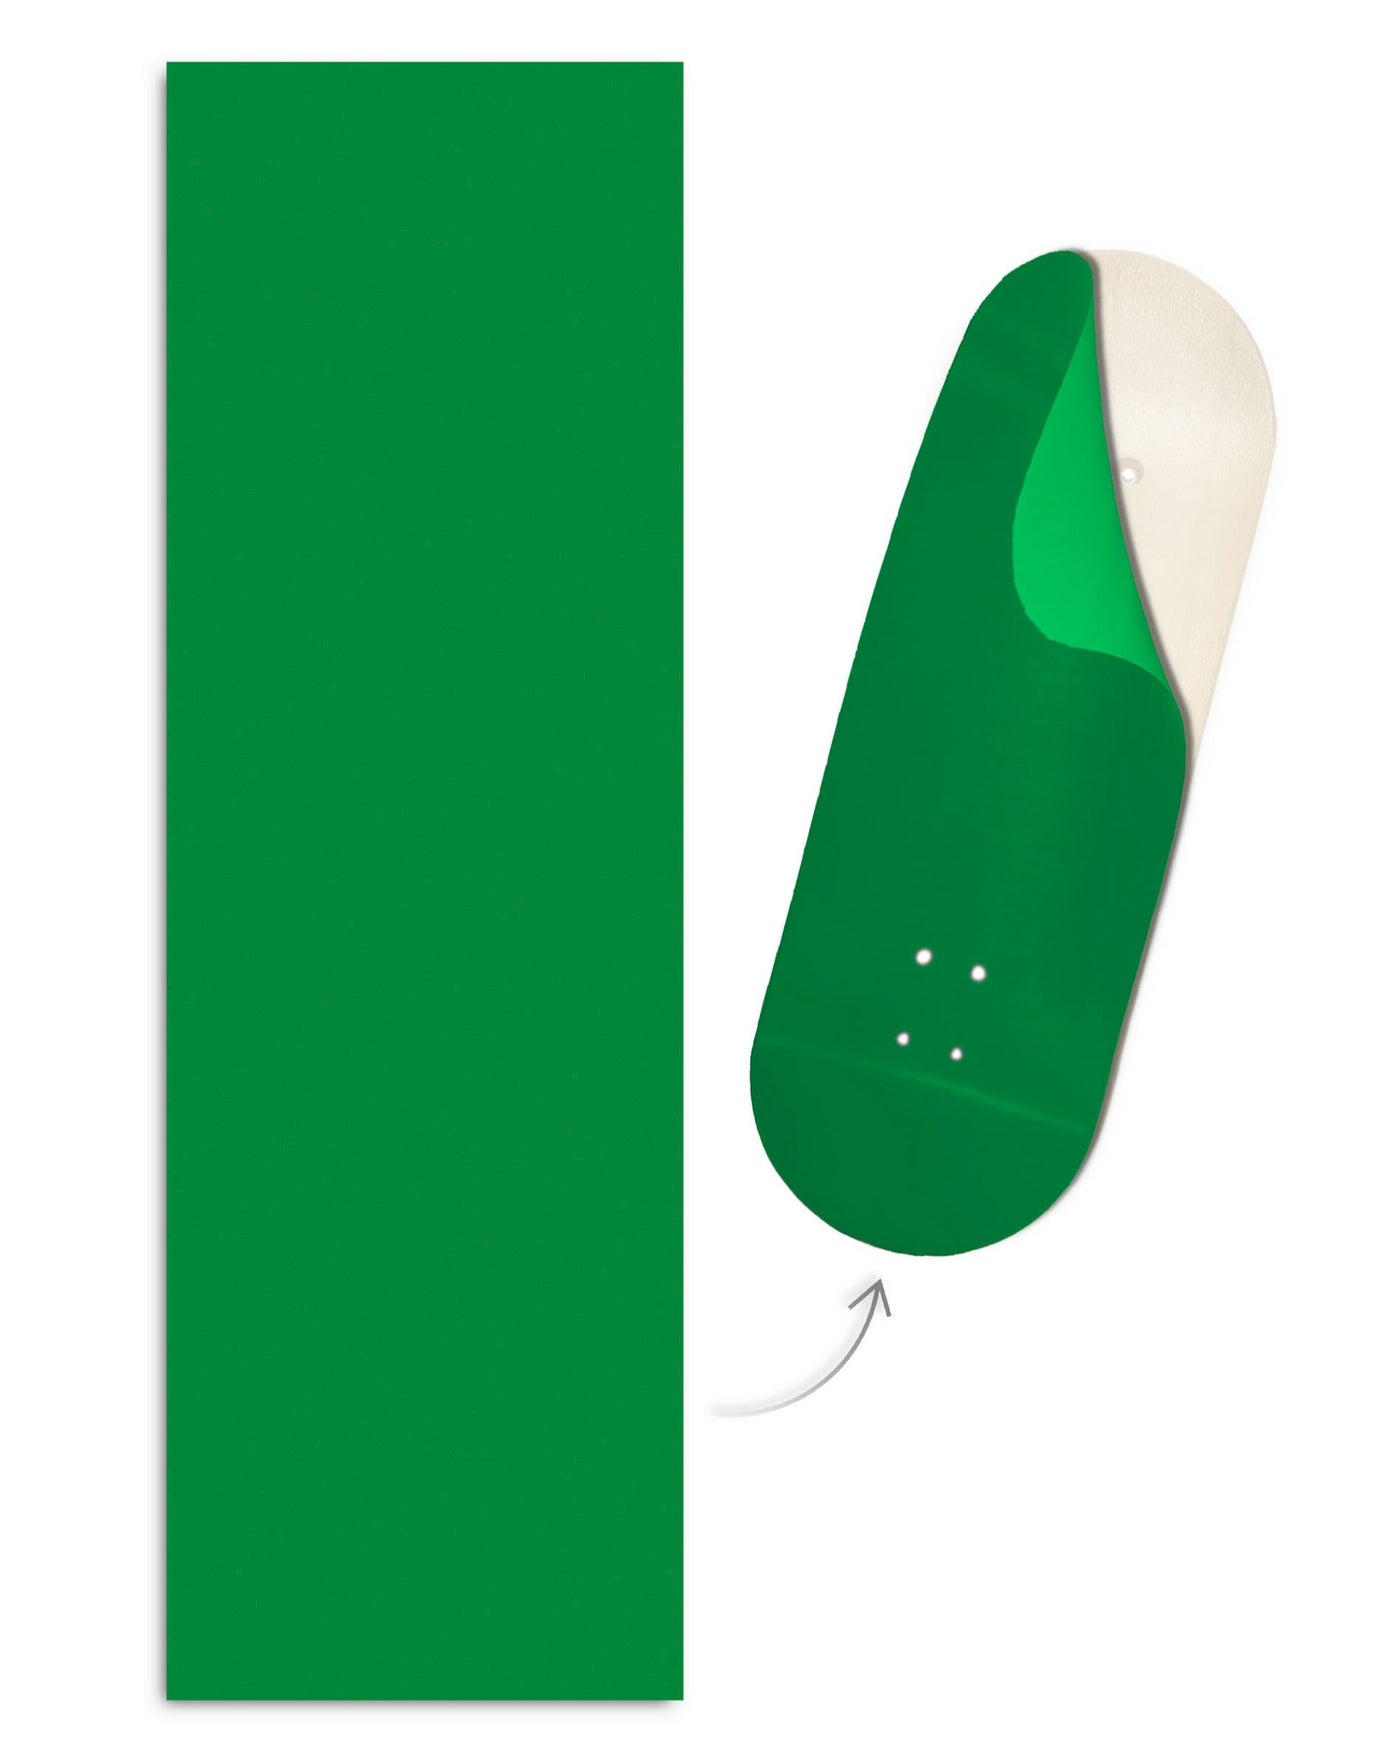 Teak Tuning "Lucky Green Colorway" ColorBlock Fingerboard Deck Wrap - 35mm x 110mm